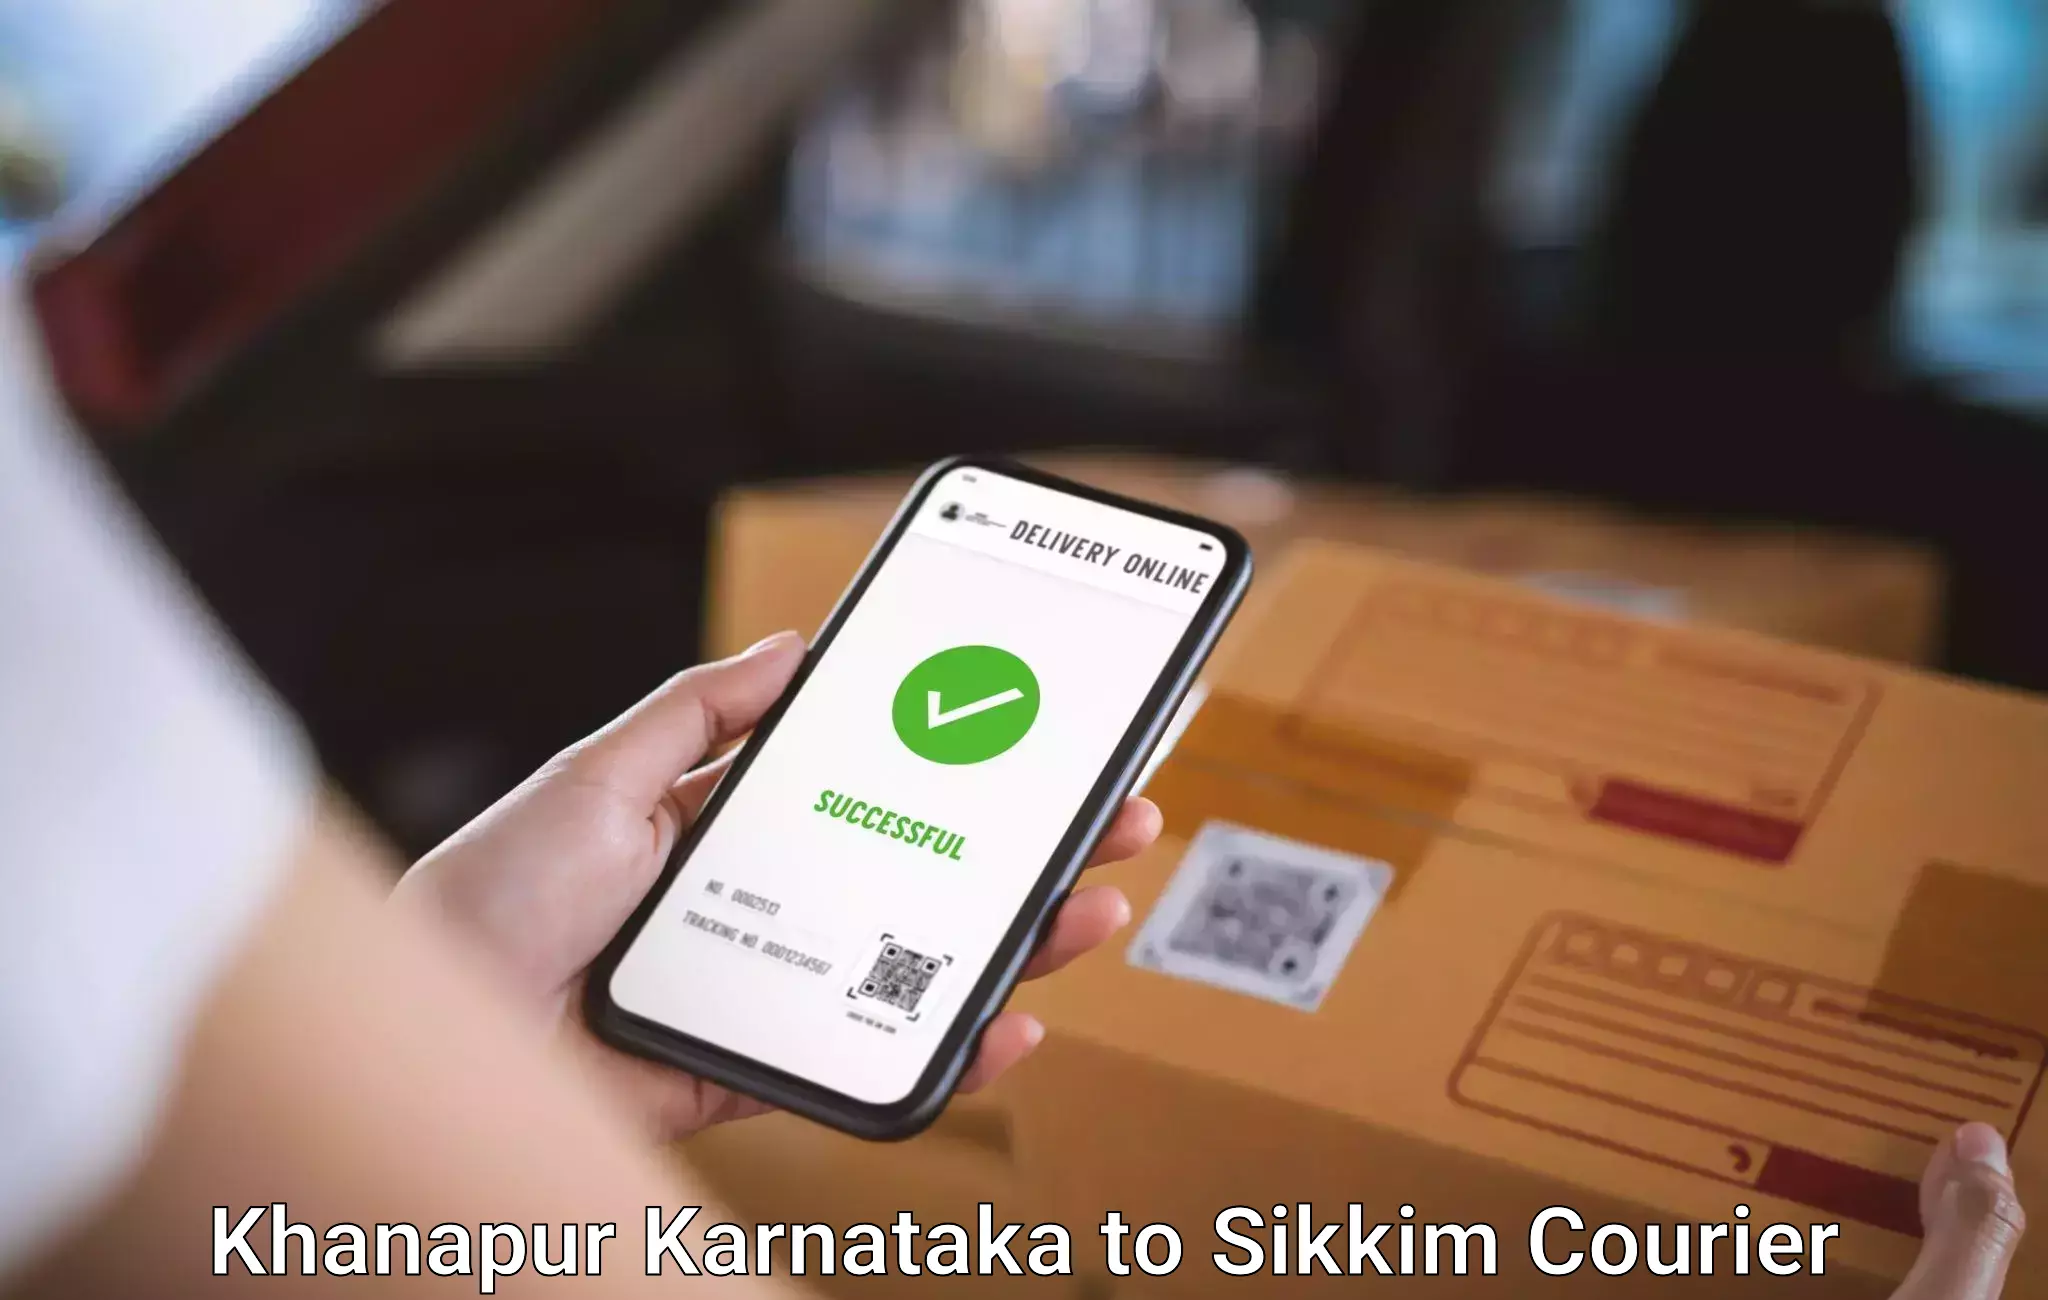 Baggage courier service Khanapur Karnataka to Pelling